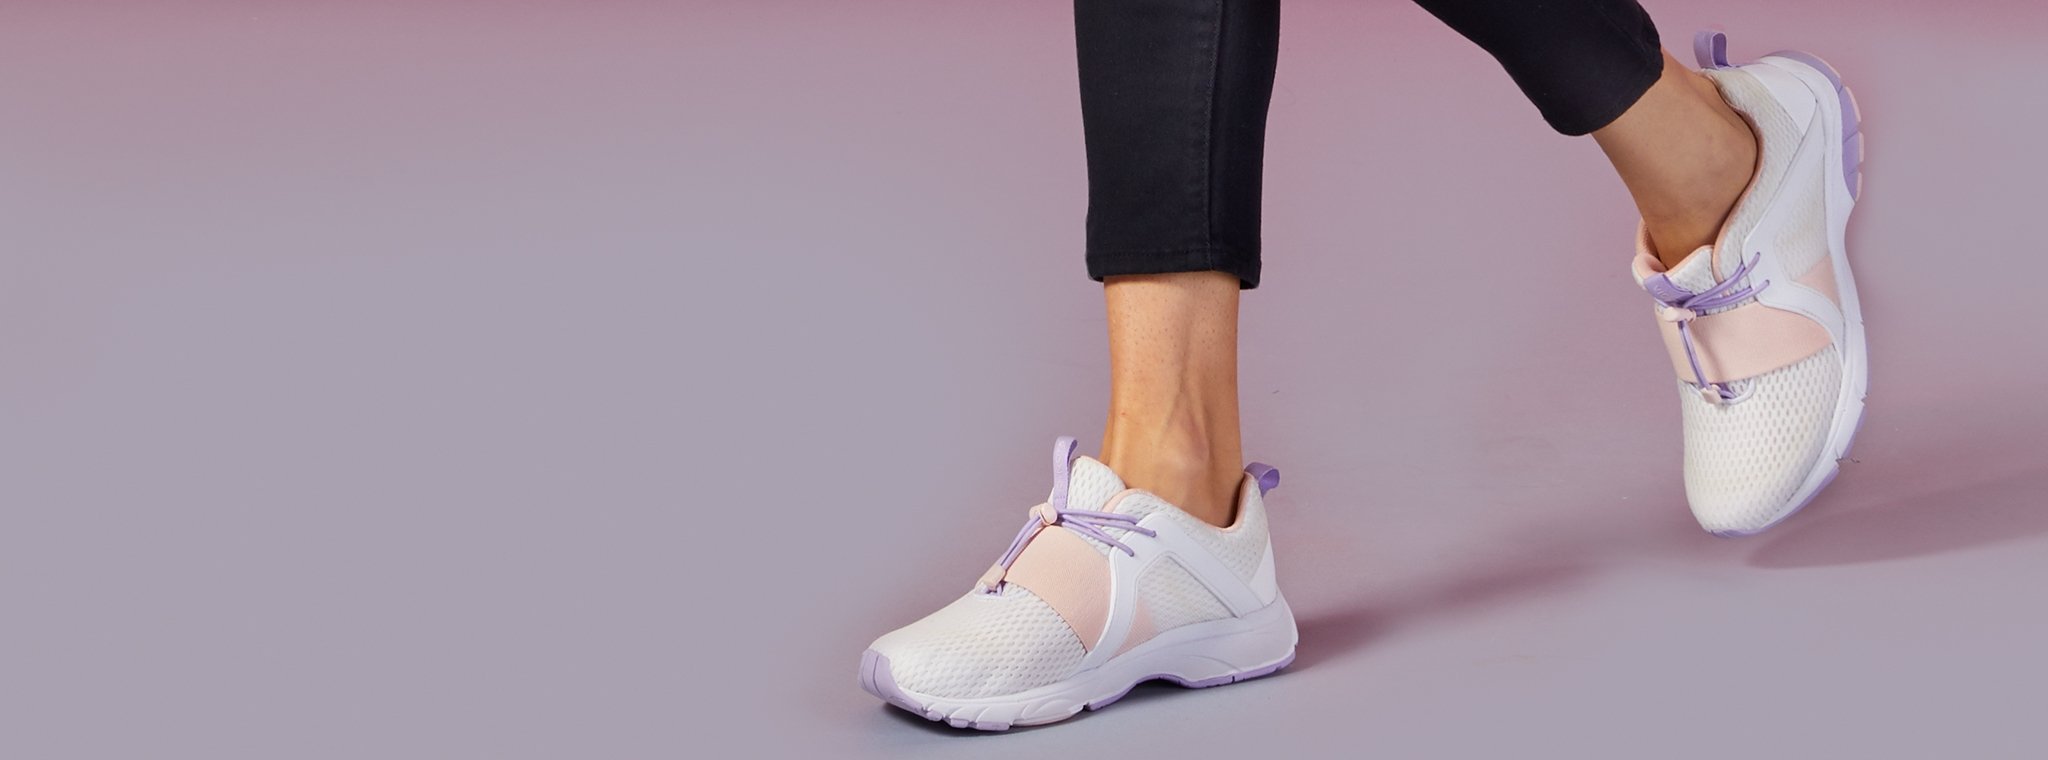 vionic women's suede walking sneakers